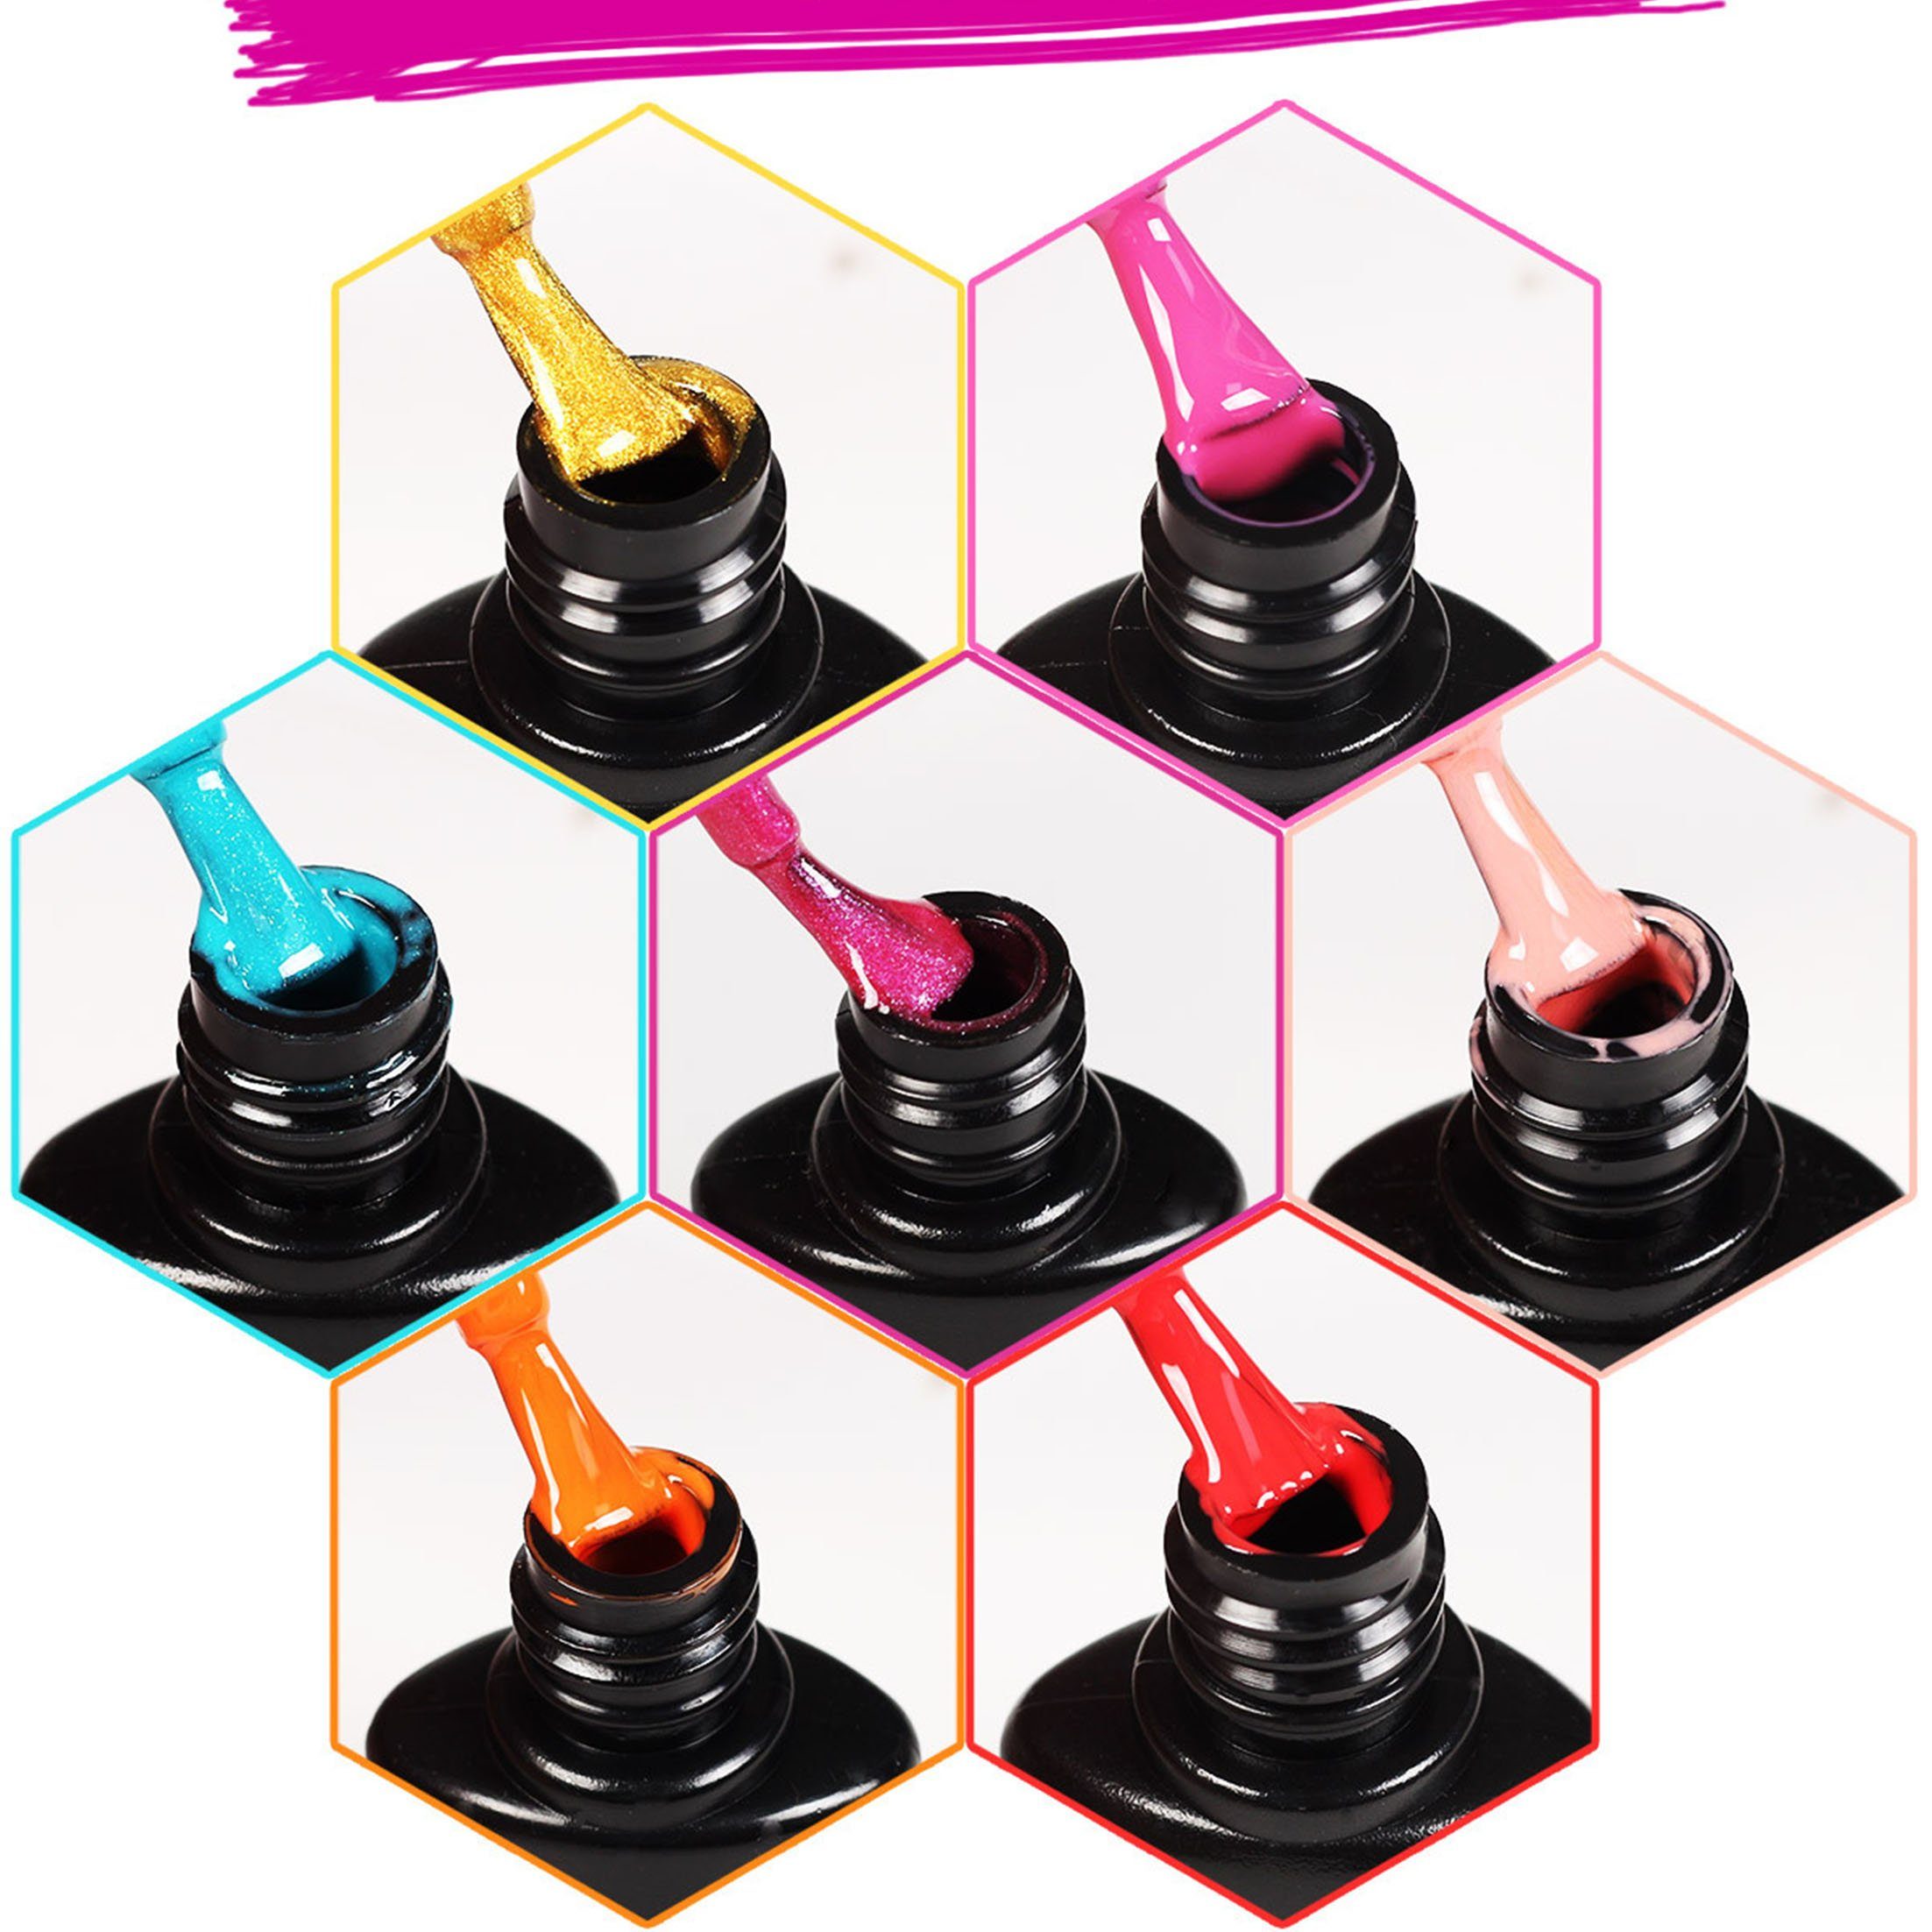 Scheiffy Nagellack-Set Art 60 Tools komplettes Nail Nagellack 10ml Nail Art Art DIY Set Art, Set, von pcs, Nail Farben Anfänger/Professionelle Nail 60-tlg., Set für 24